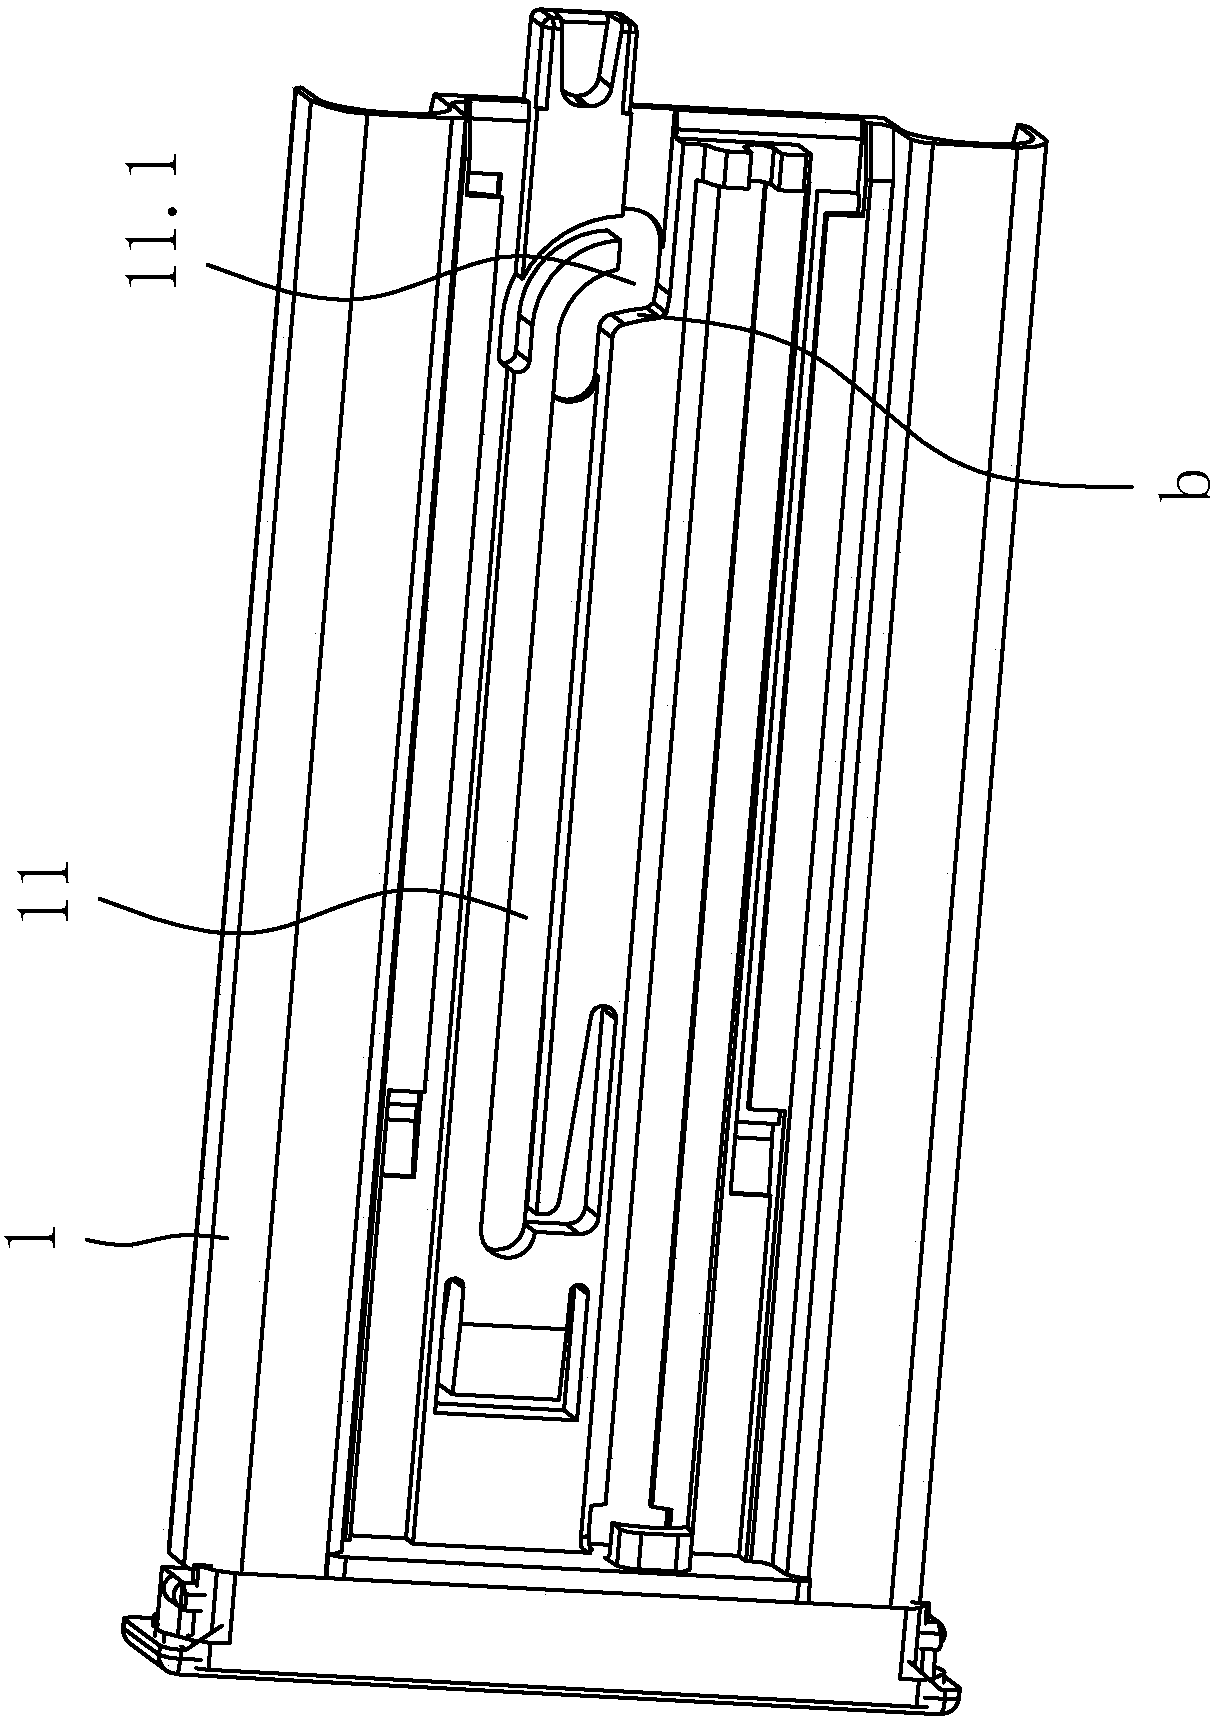 Buffer self-closing device for telescopic slide rail